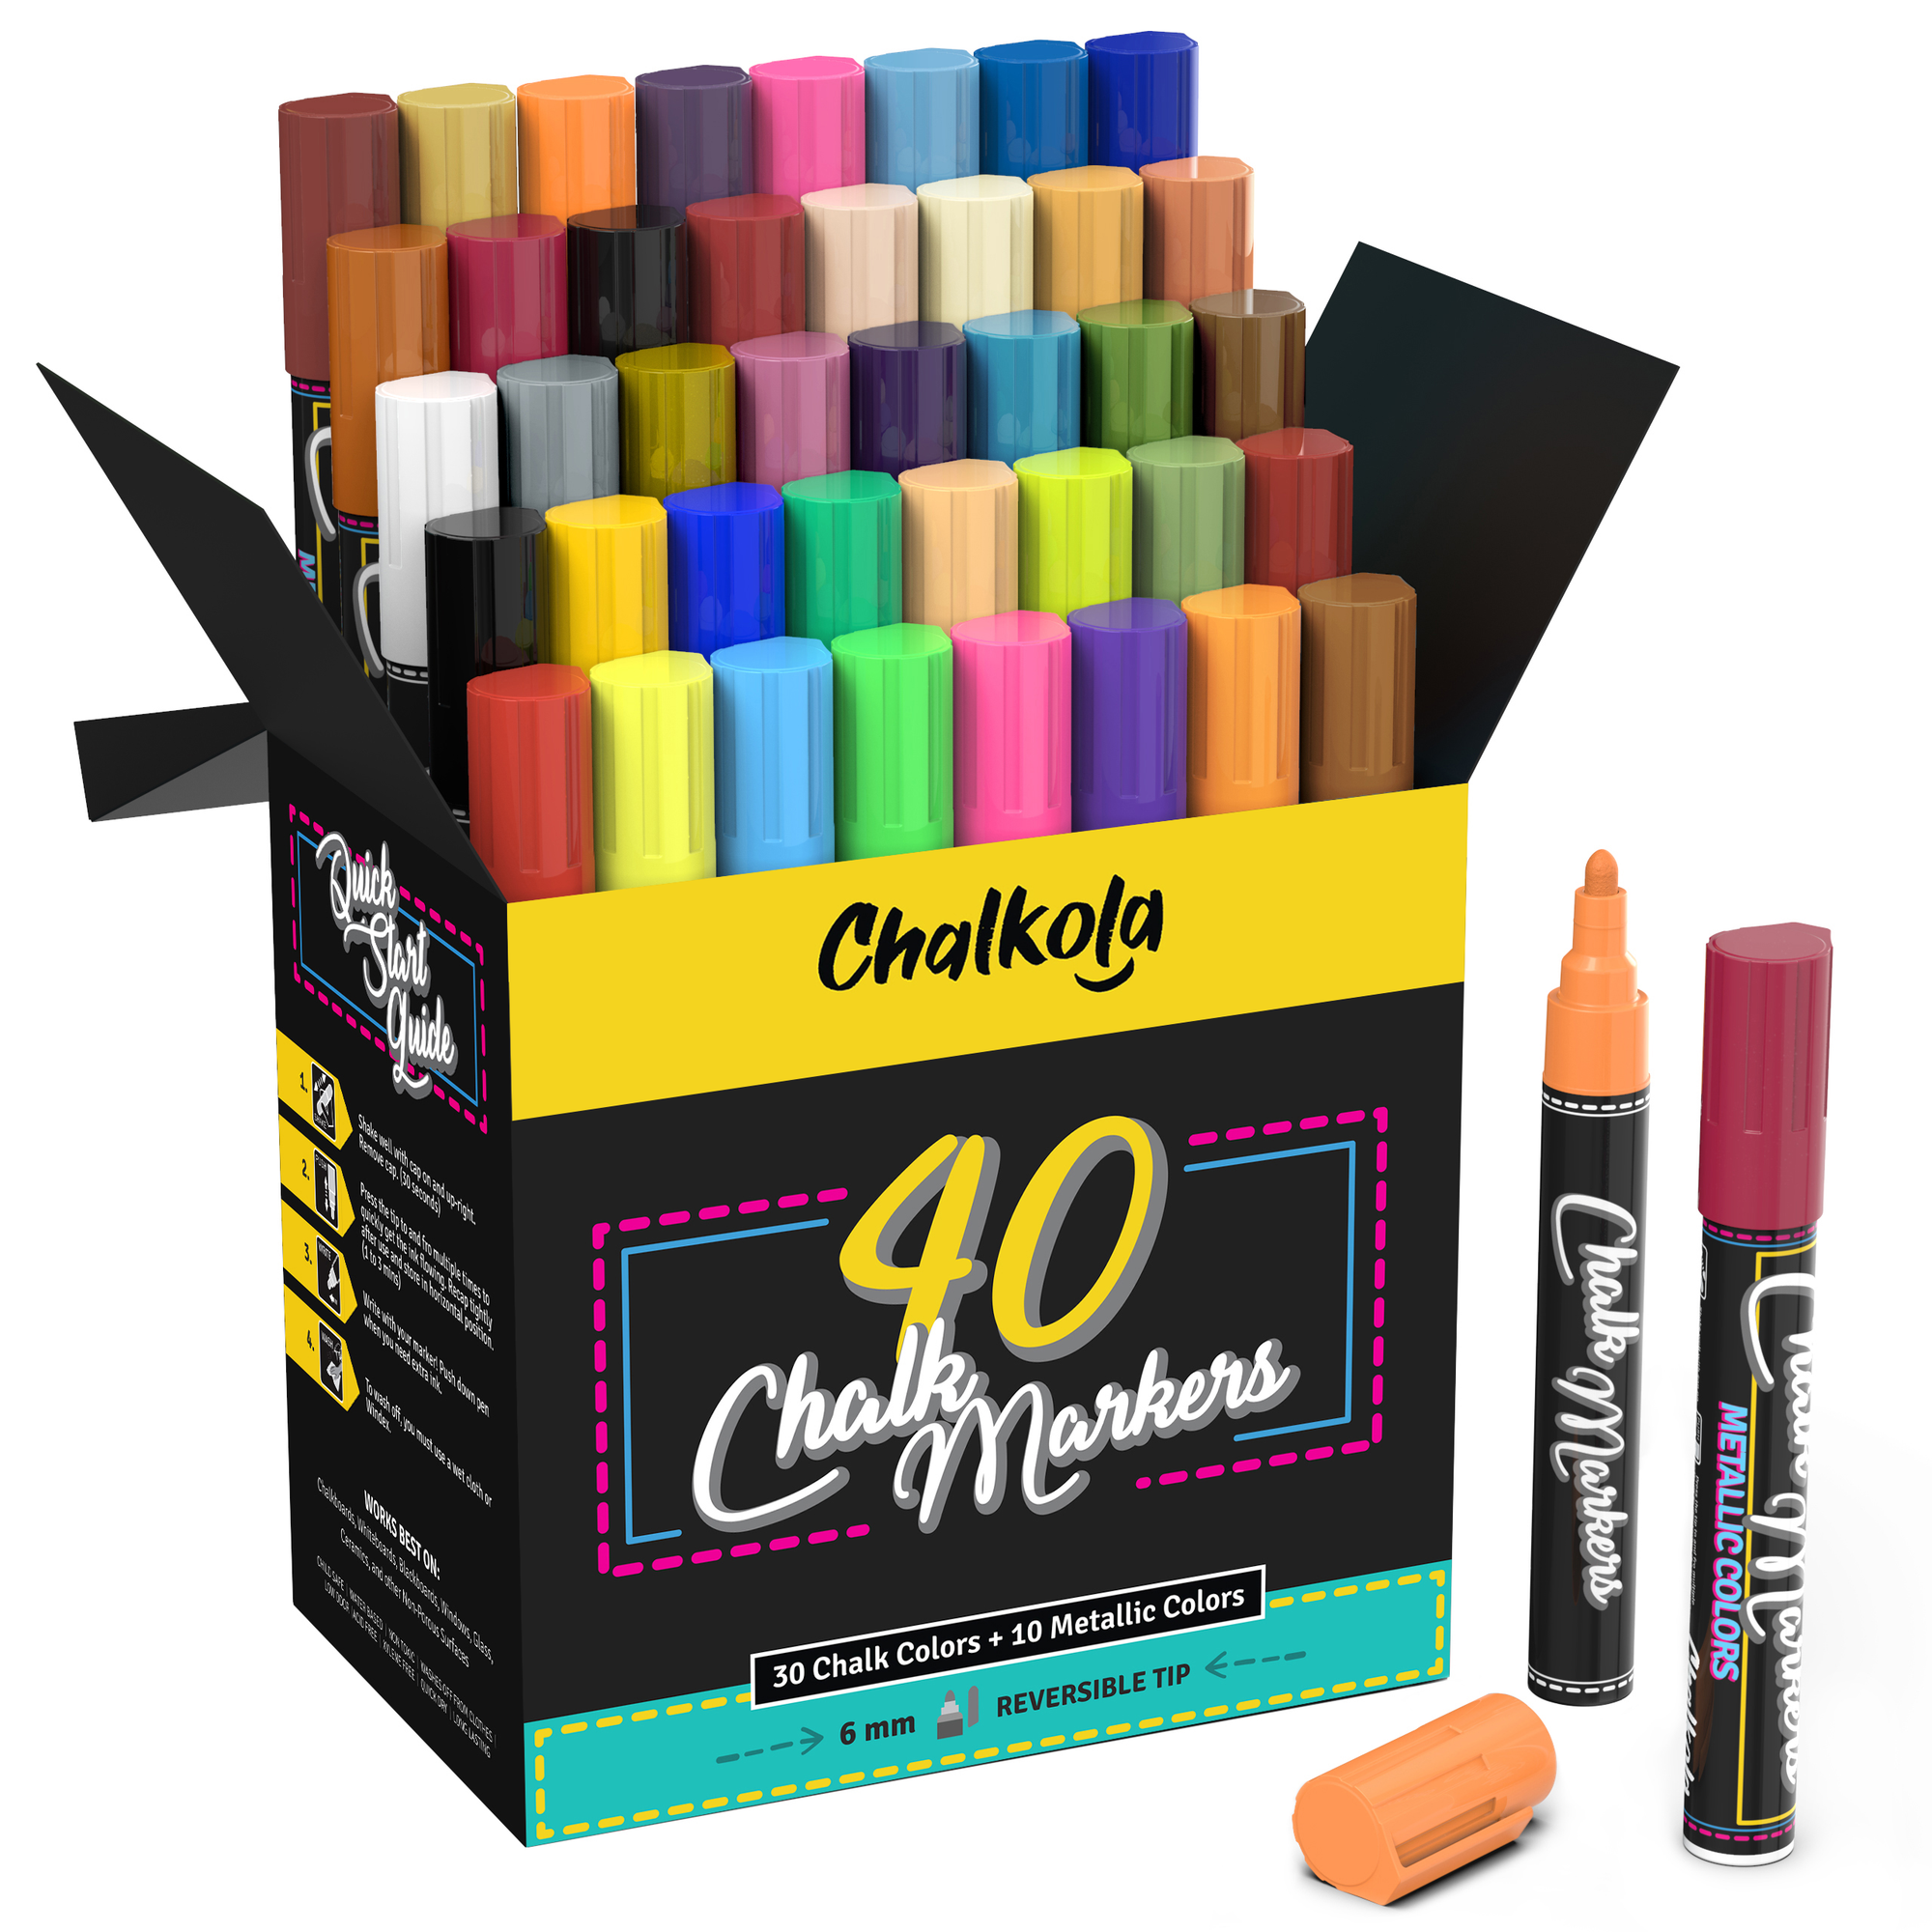 Chalkola chk_5_blue_markers 5 Blue Chalkboard Chalk Pens - Blue Dry Erase  Markers For Blackboard, Chalkboard Signs, Windows, Glass Variety Pack -  Fine Jumbo